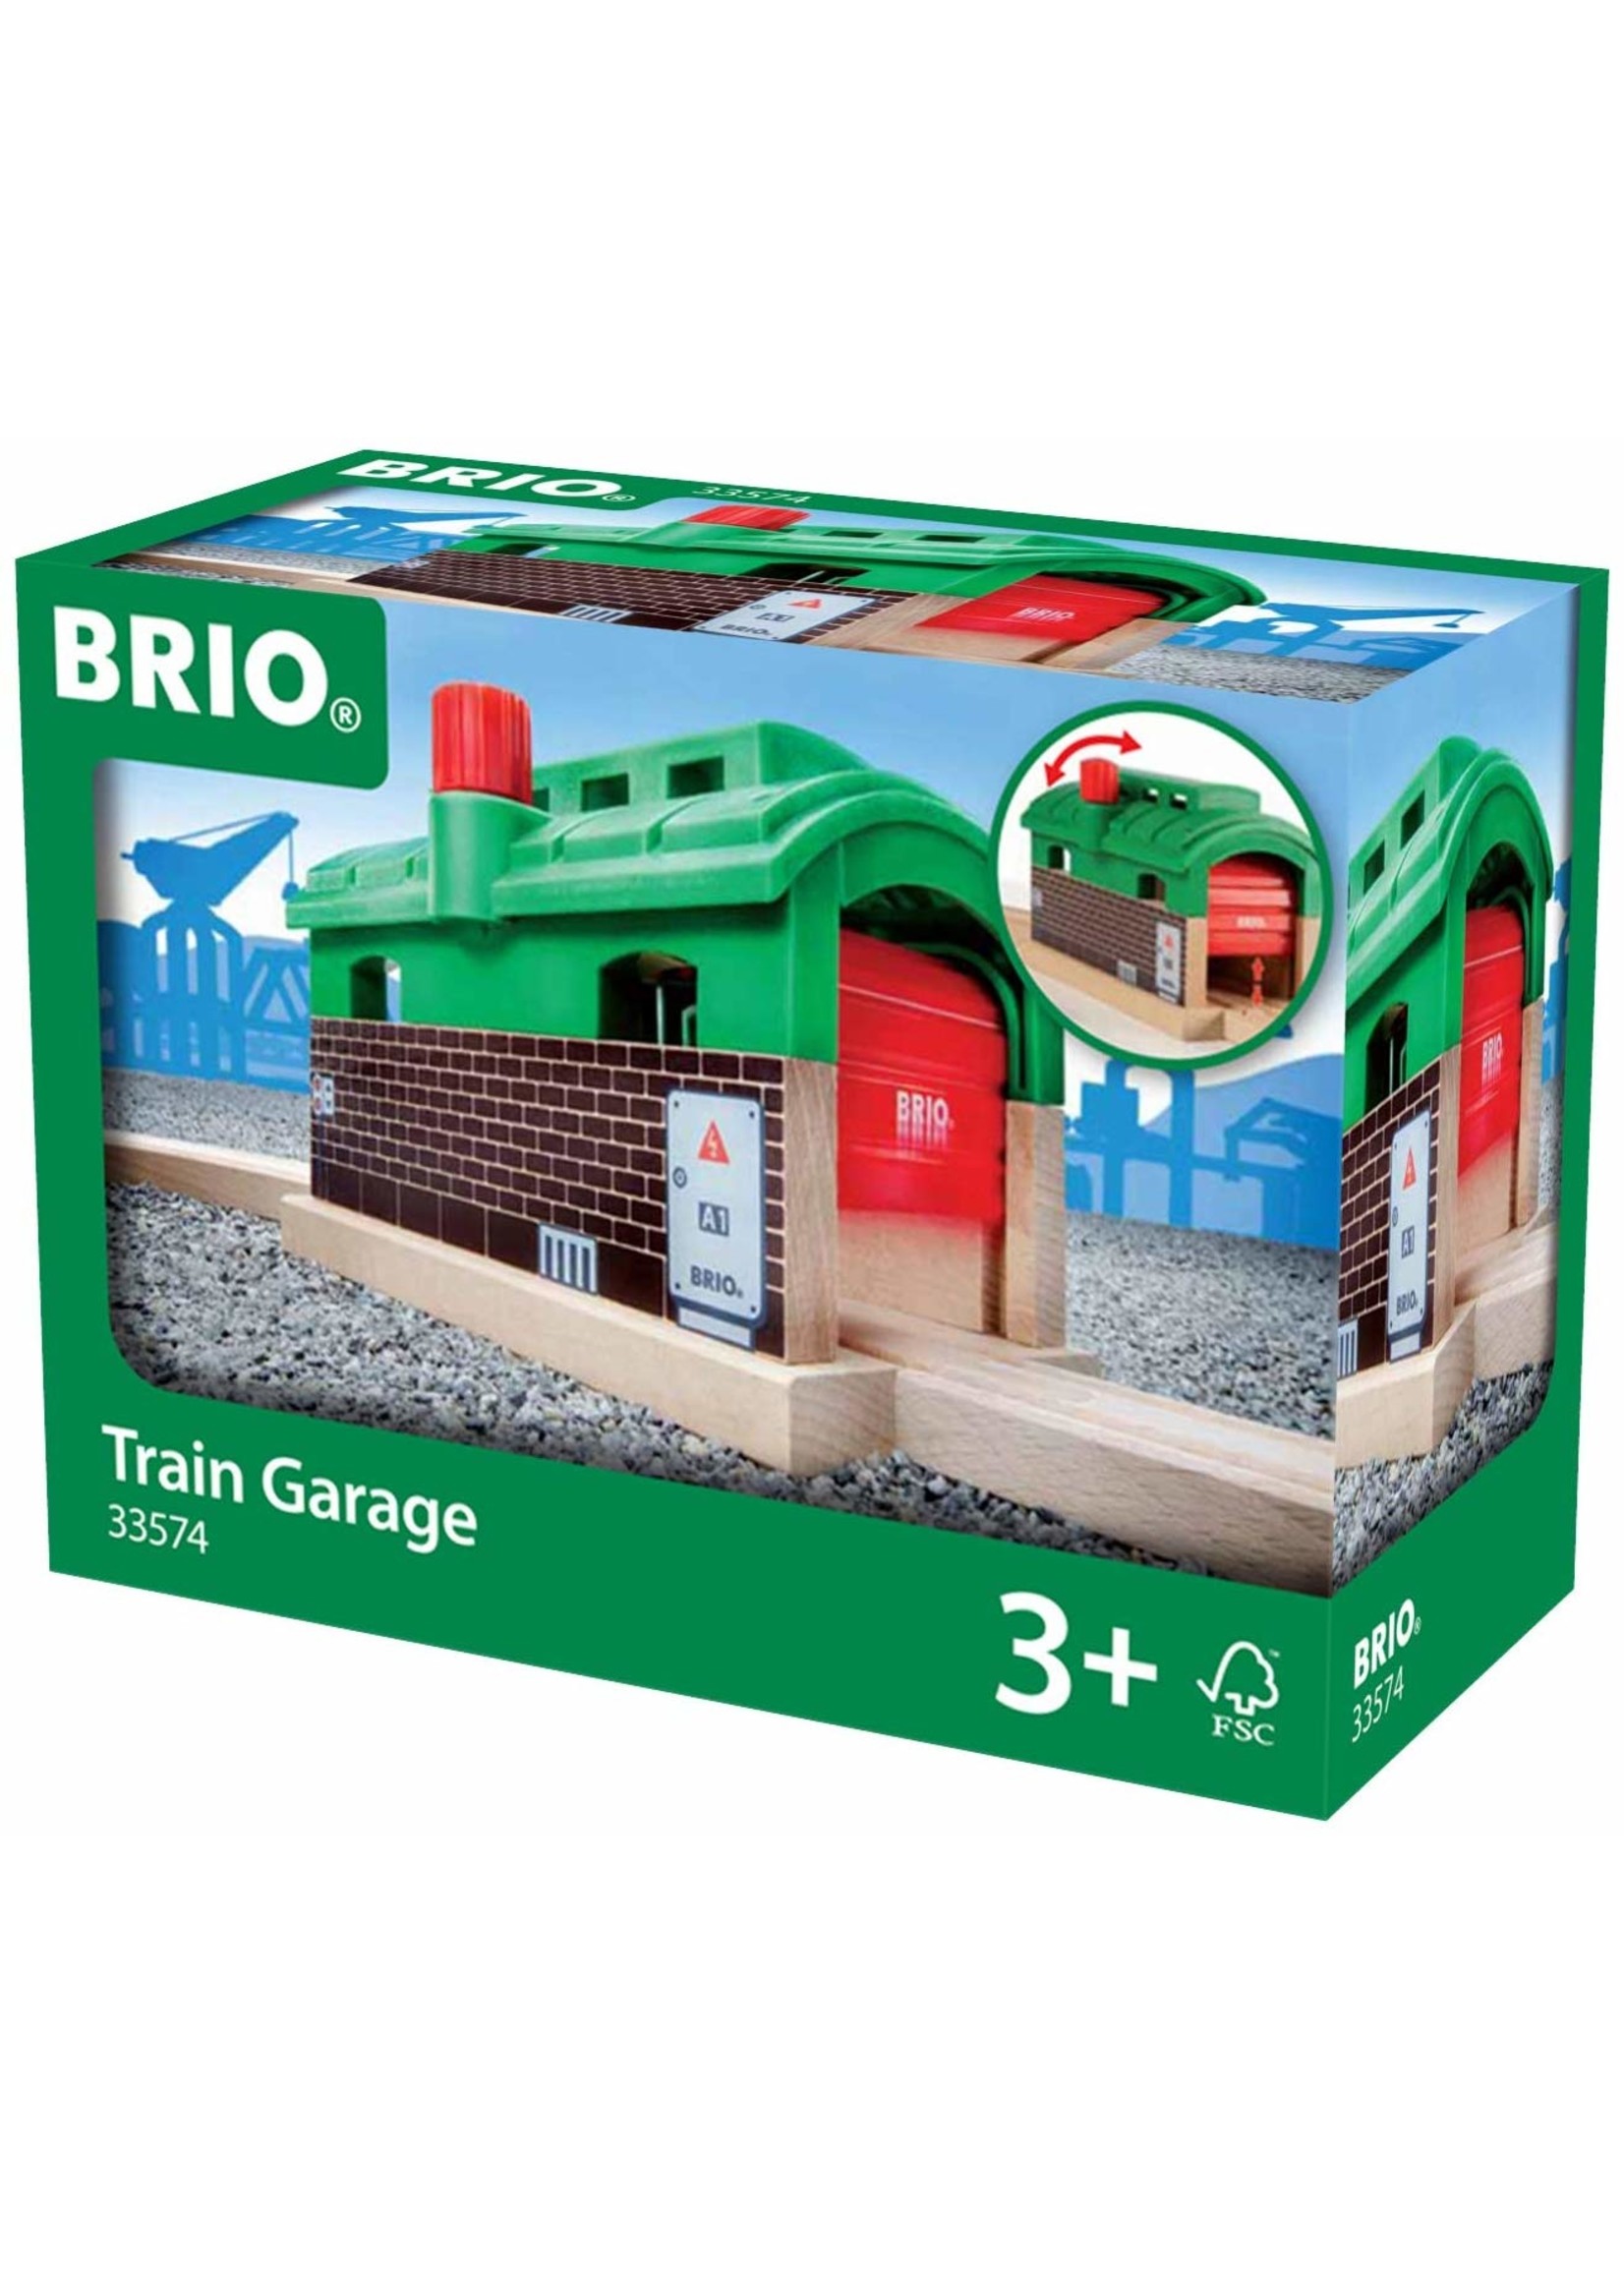 Brio 33574 - Train Garage